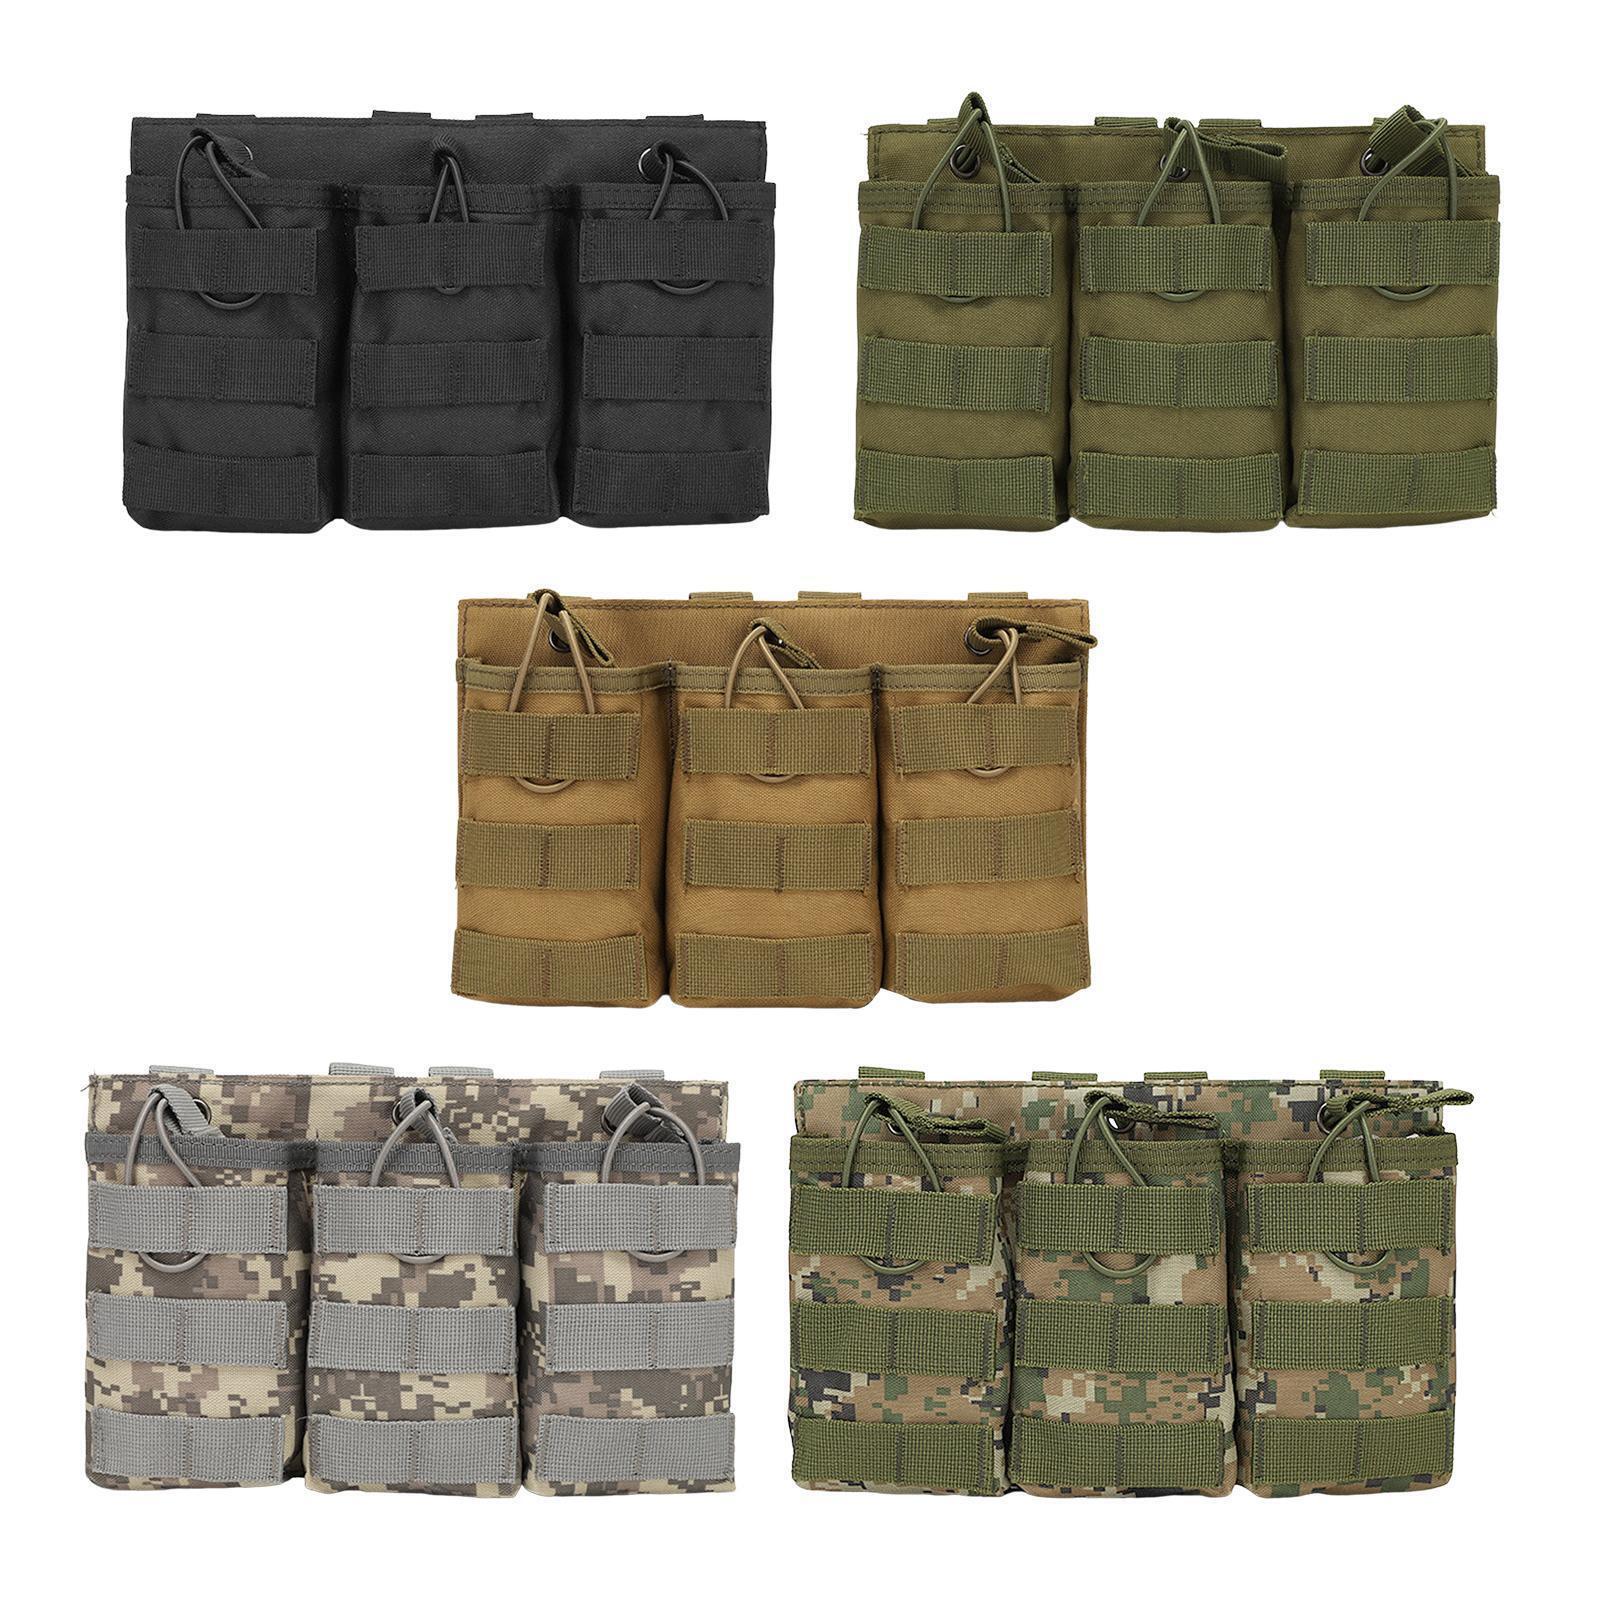 Multifunctional Tool Bag Organizer Gear Accessory Holder Backpack Bag Case Strap